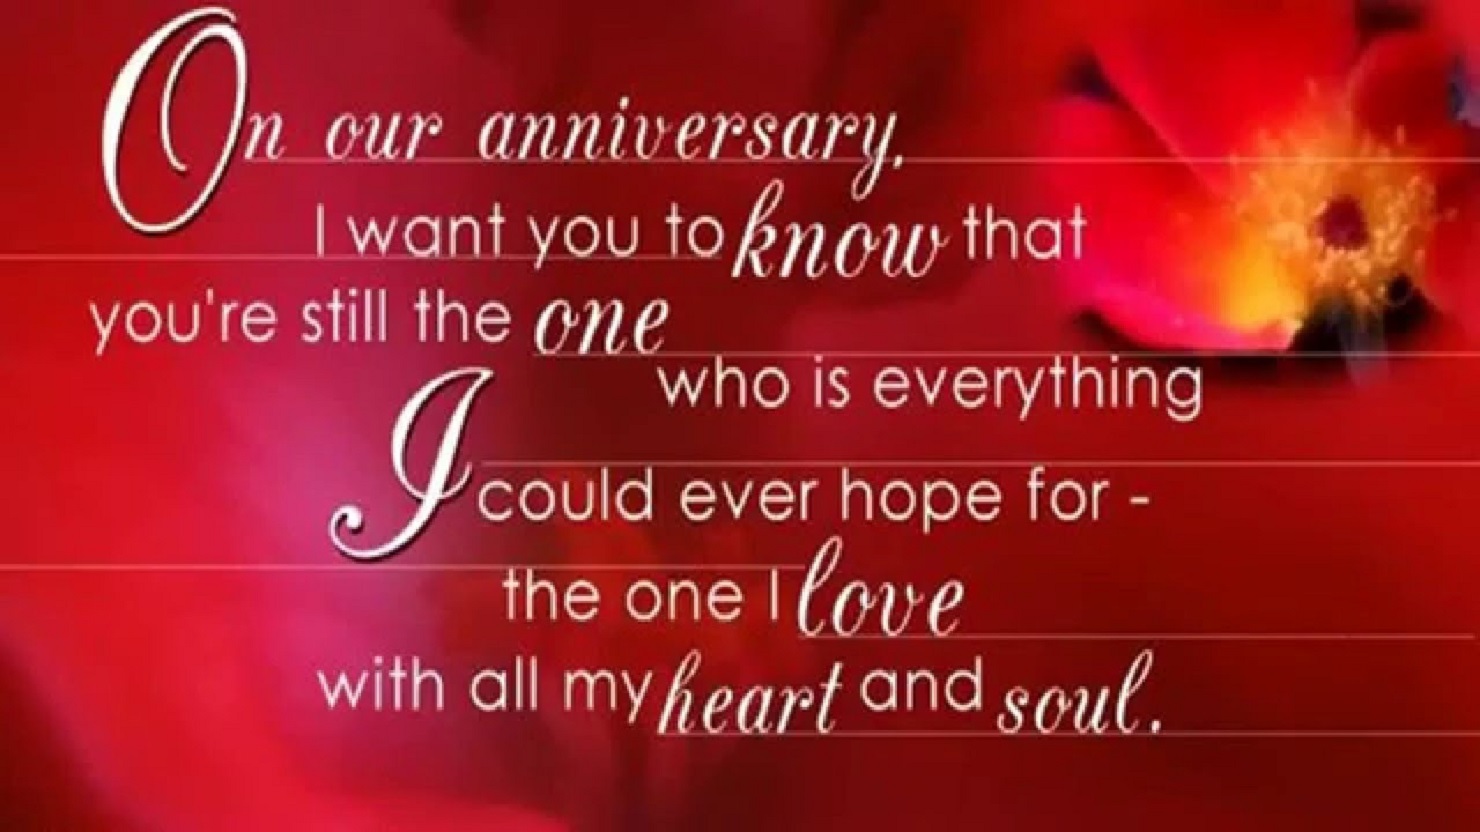 beautiful wishes on anniversary